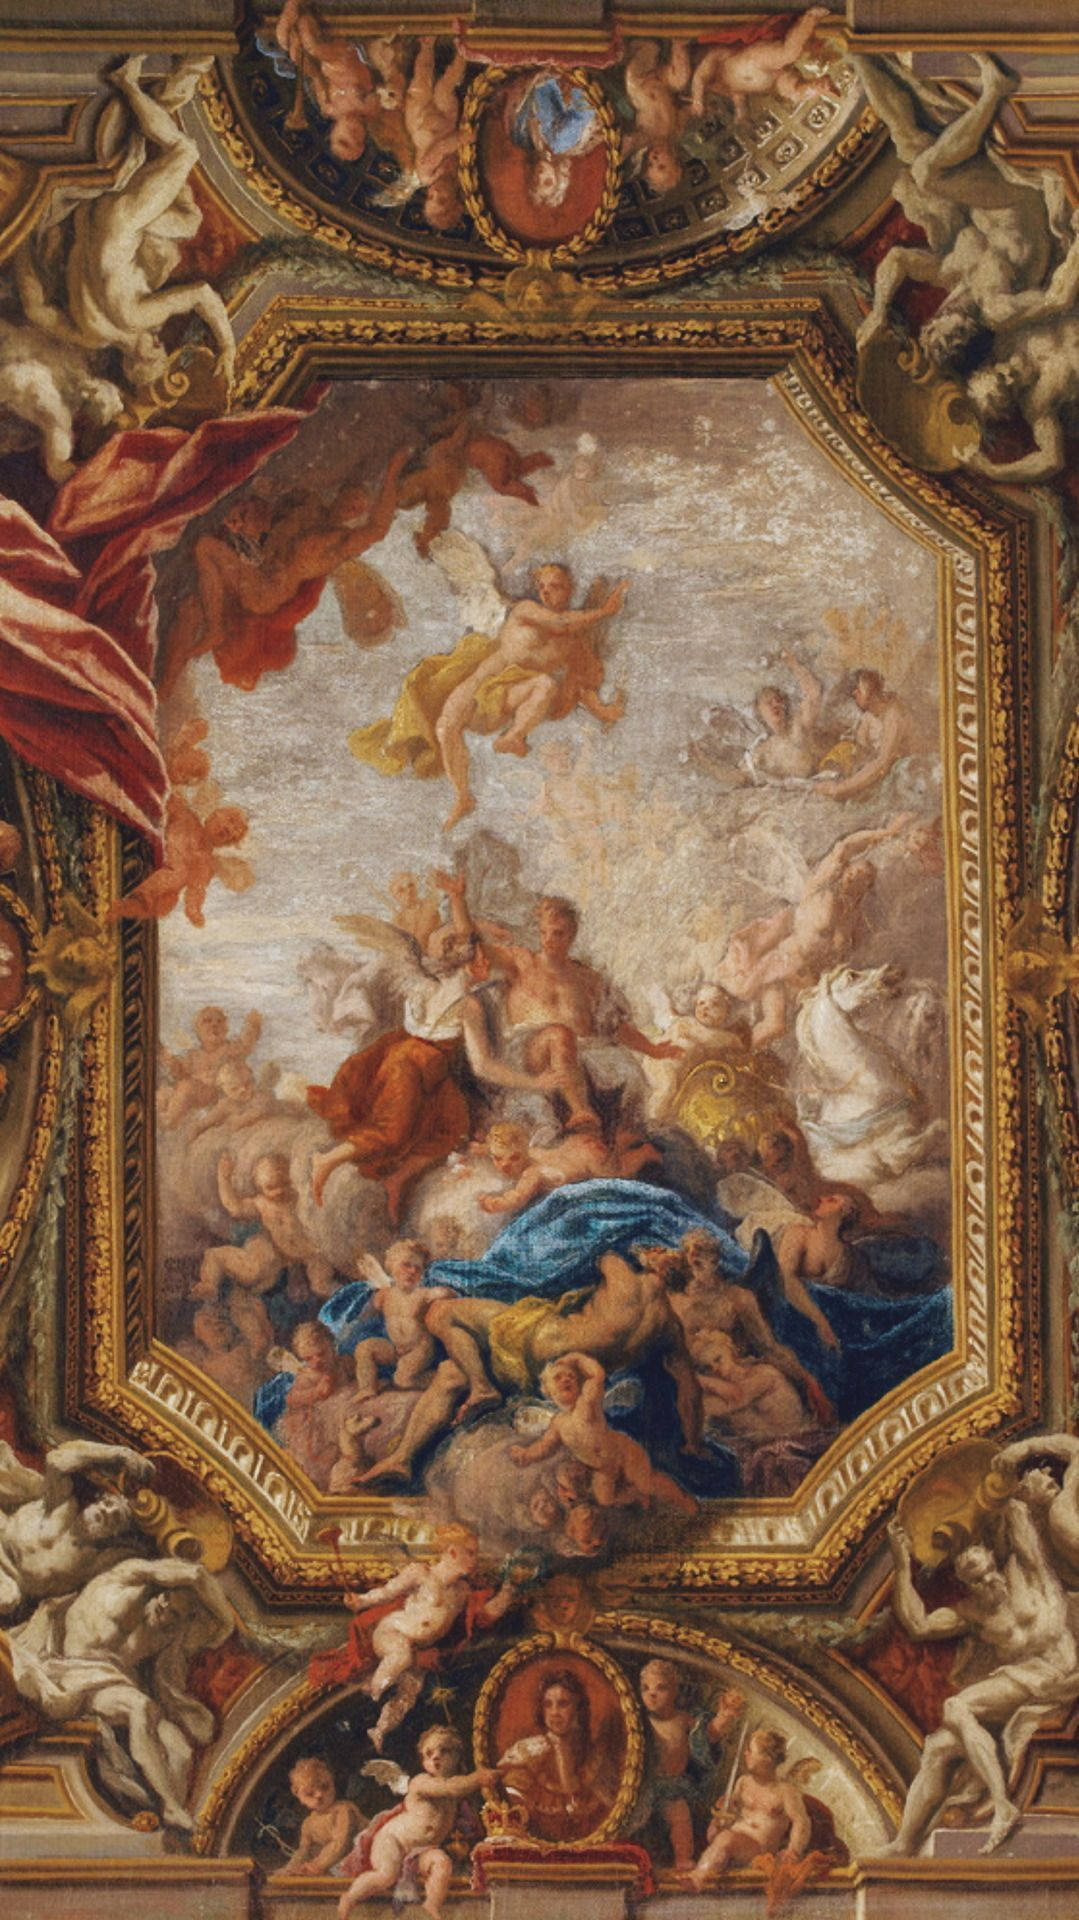 Renaissance Art Painting Of Angels